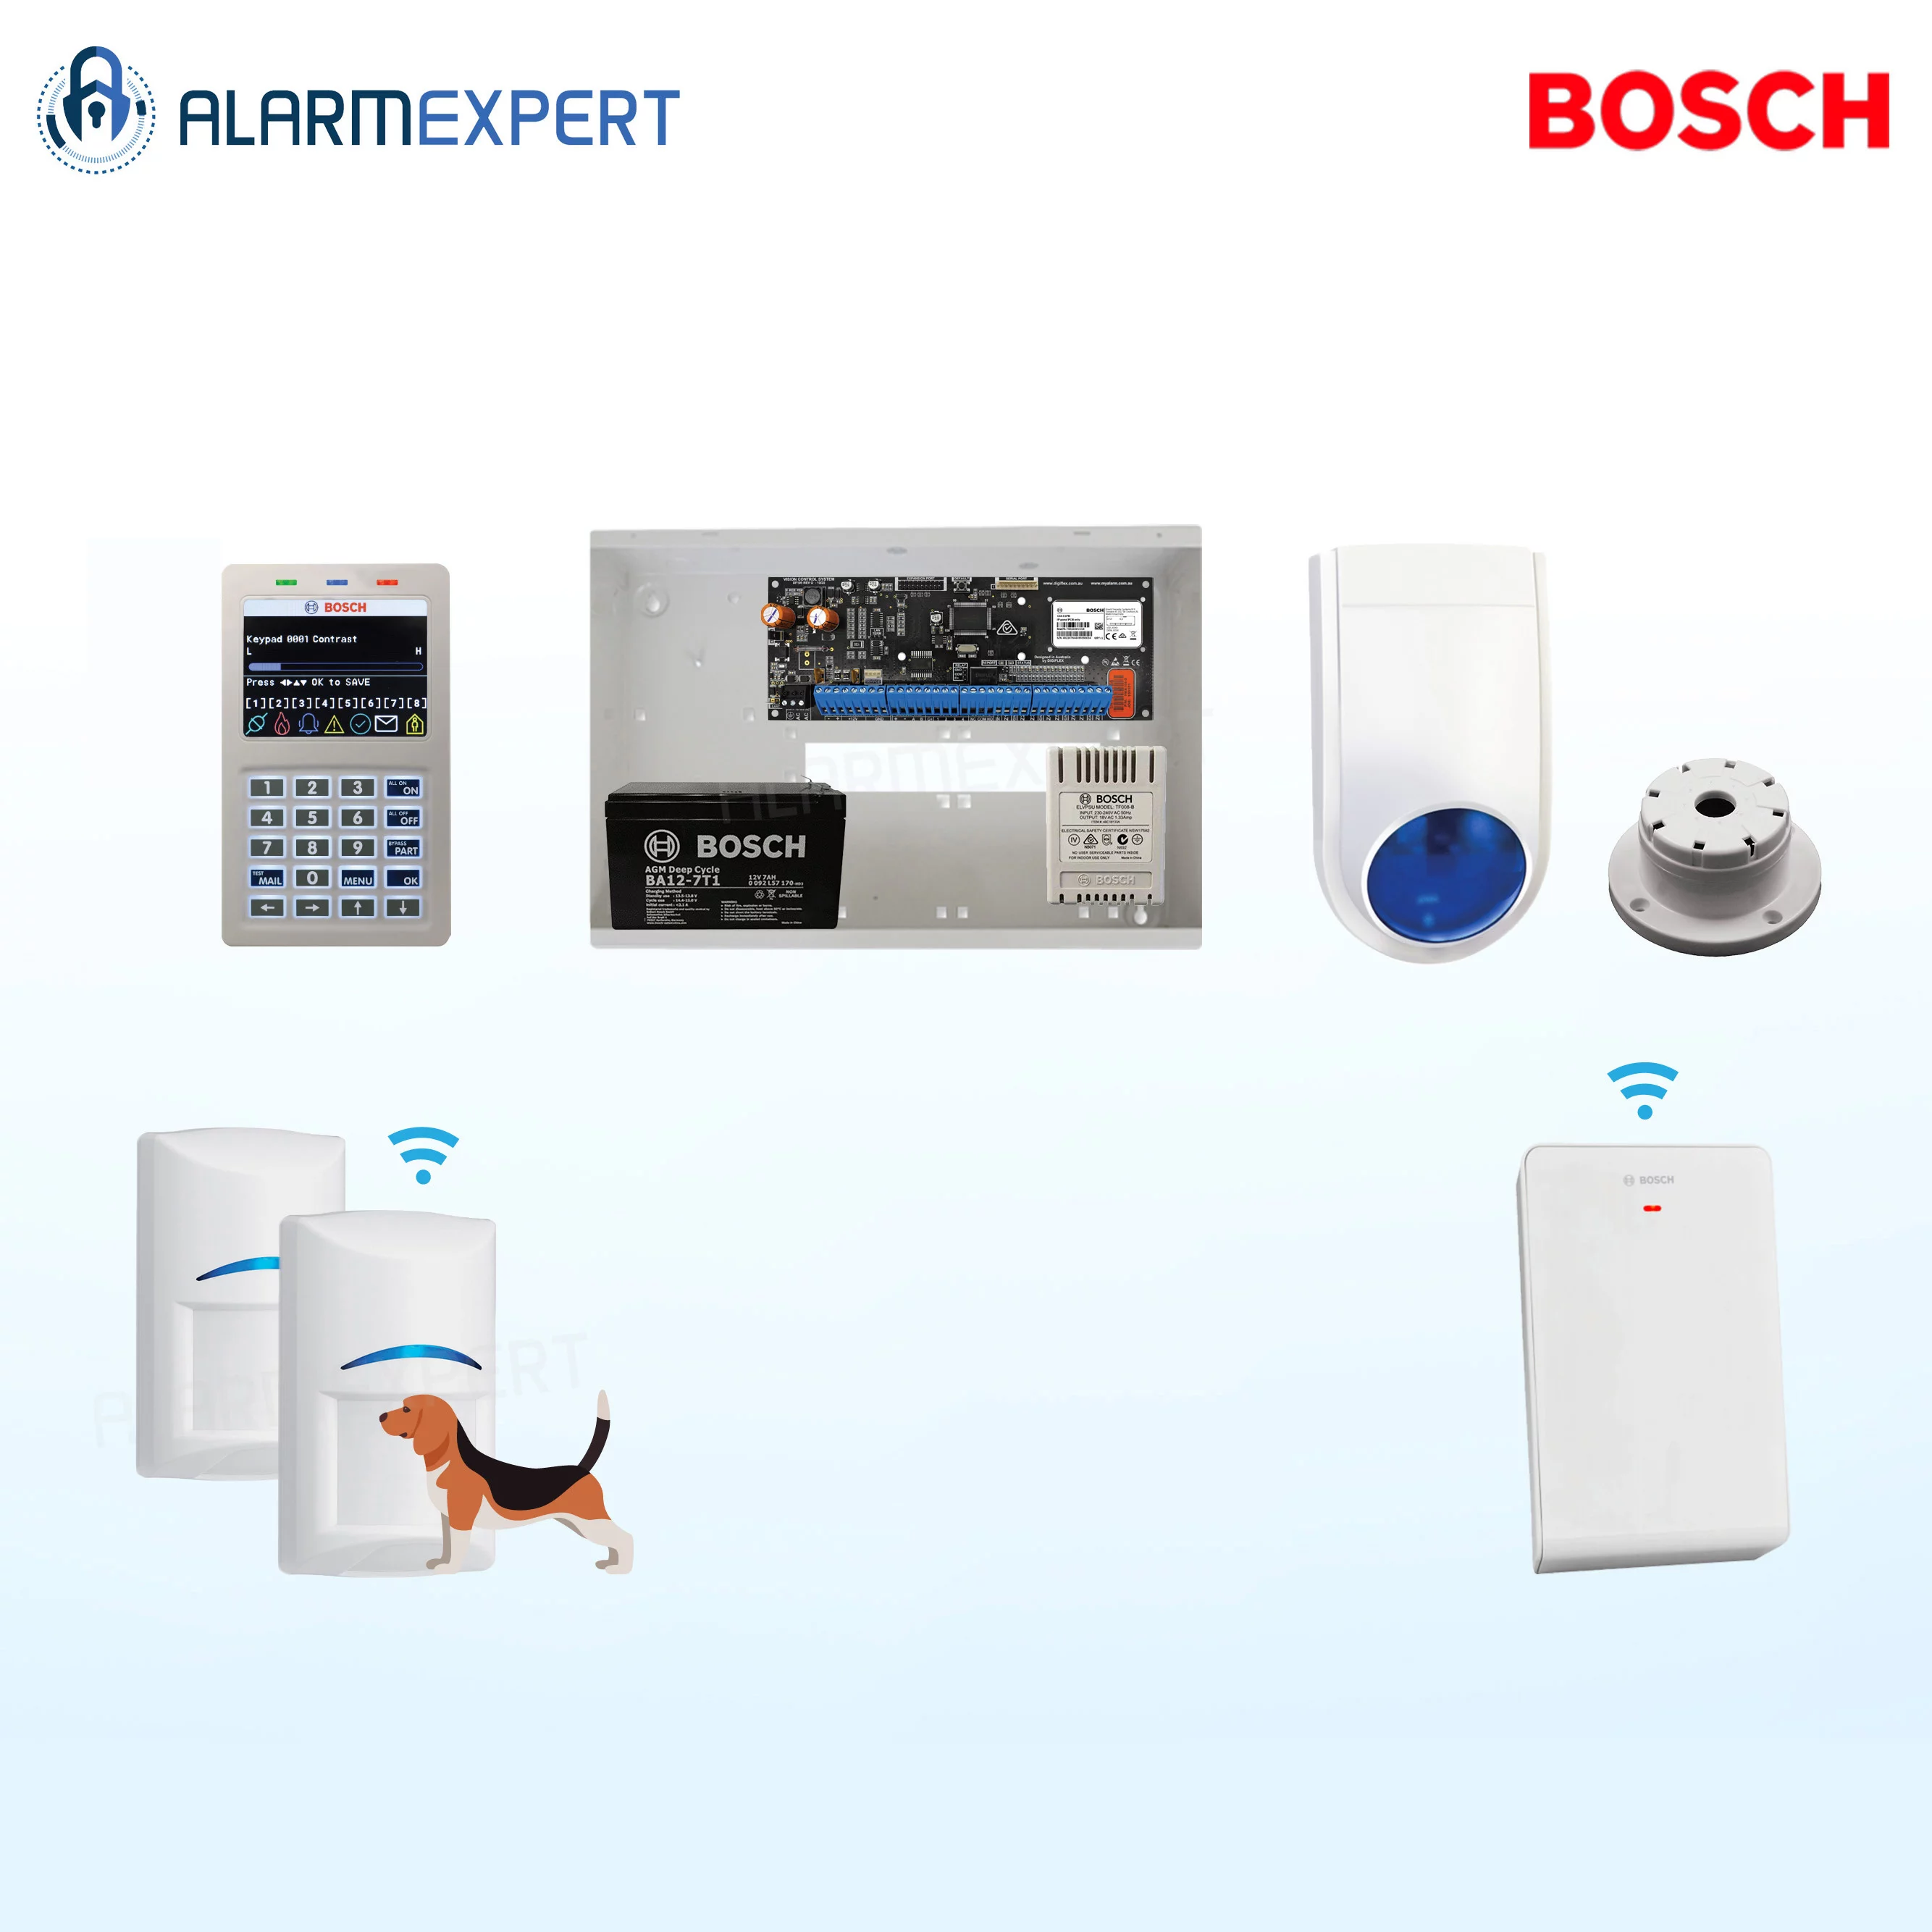 Bosch Solution 6000 Smart + 2 x Wireless TriTechs (Pet Proof) + Keypad + Receiver